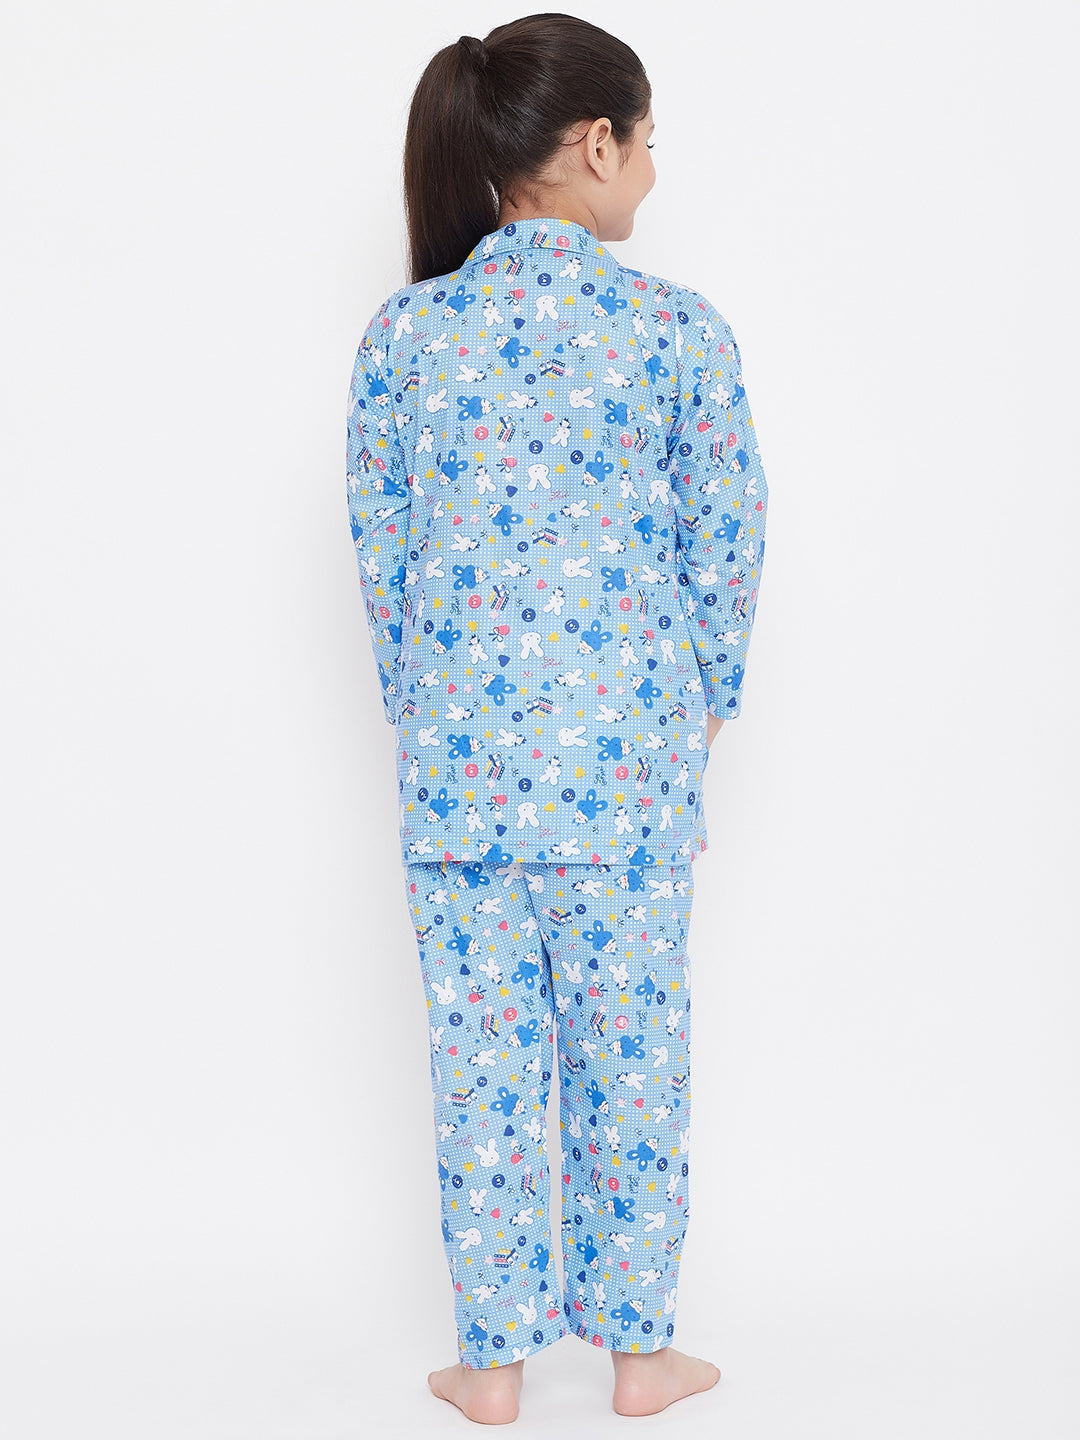 Kydzi Peach & Blue Printed Rayon Nightsuit (Pack of 2)